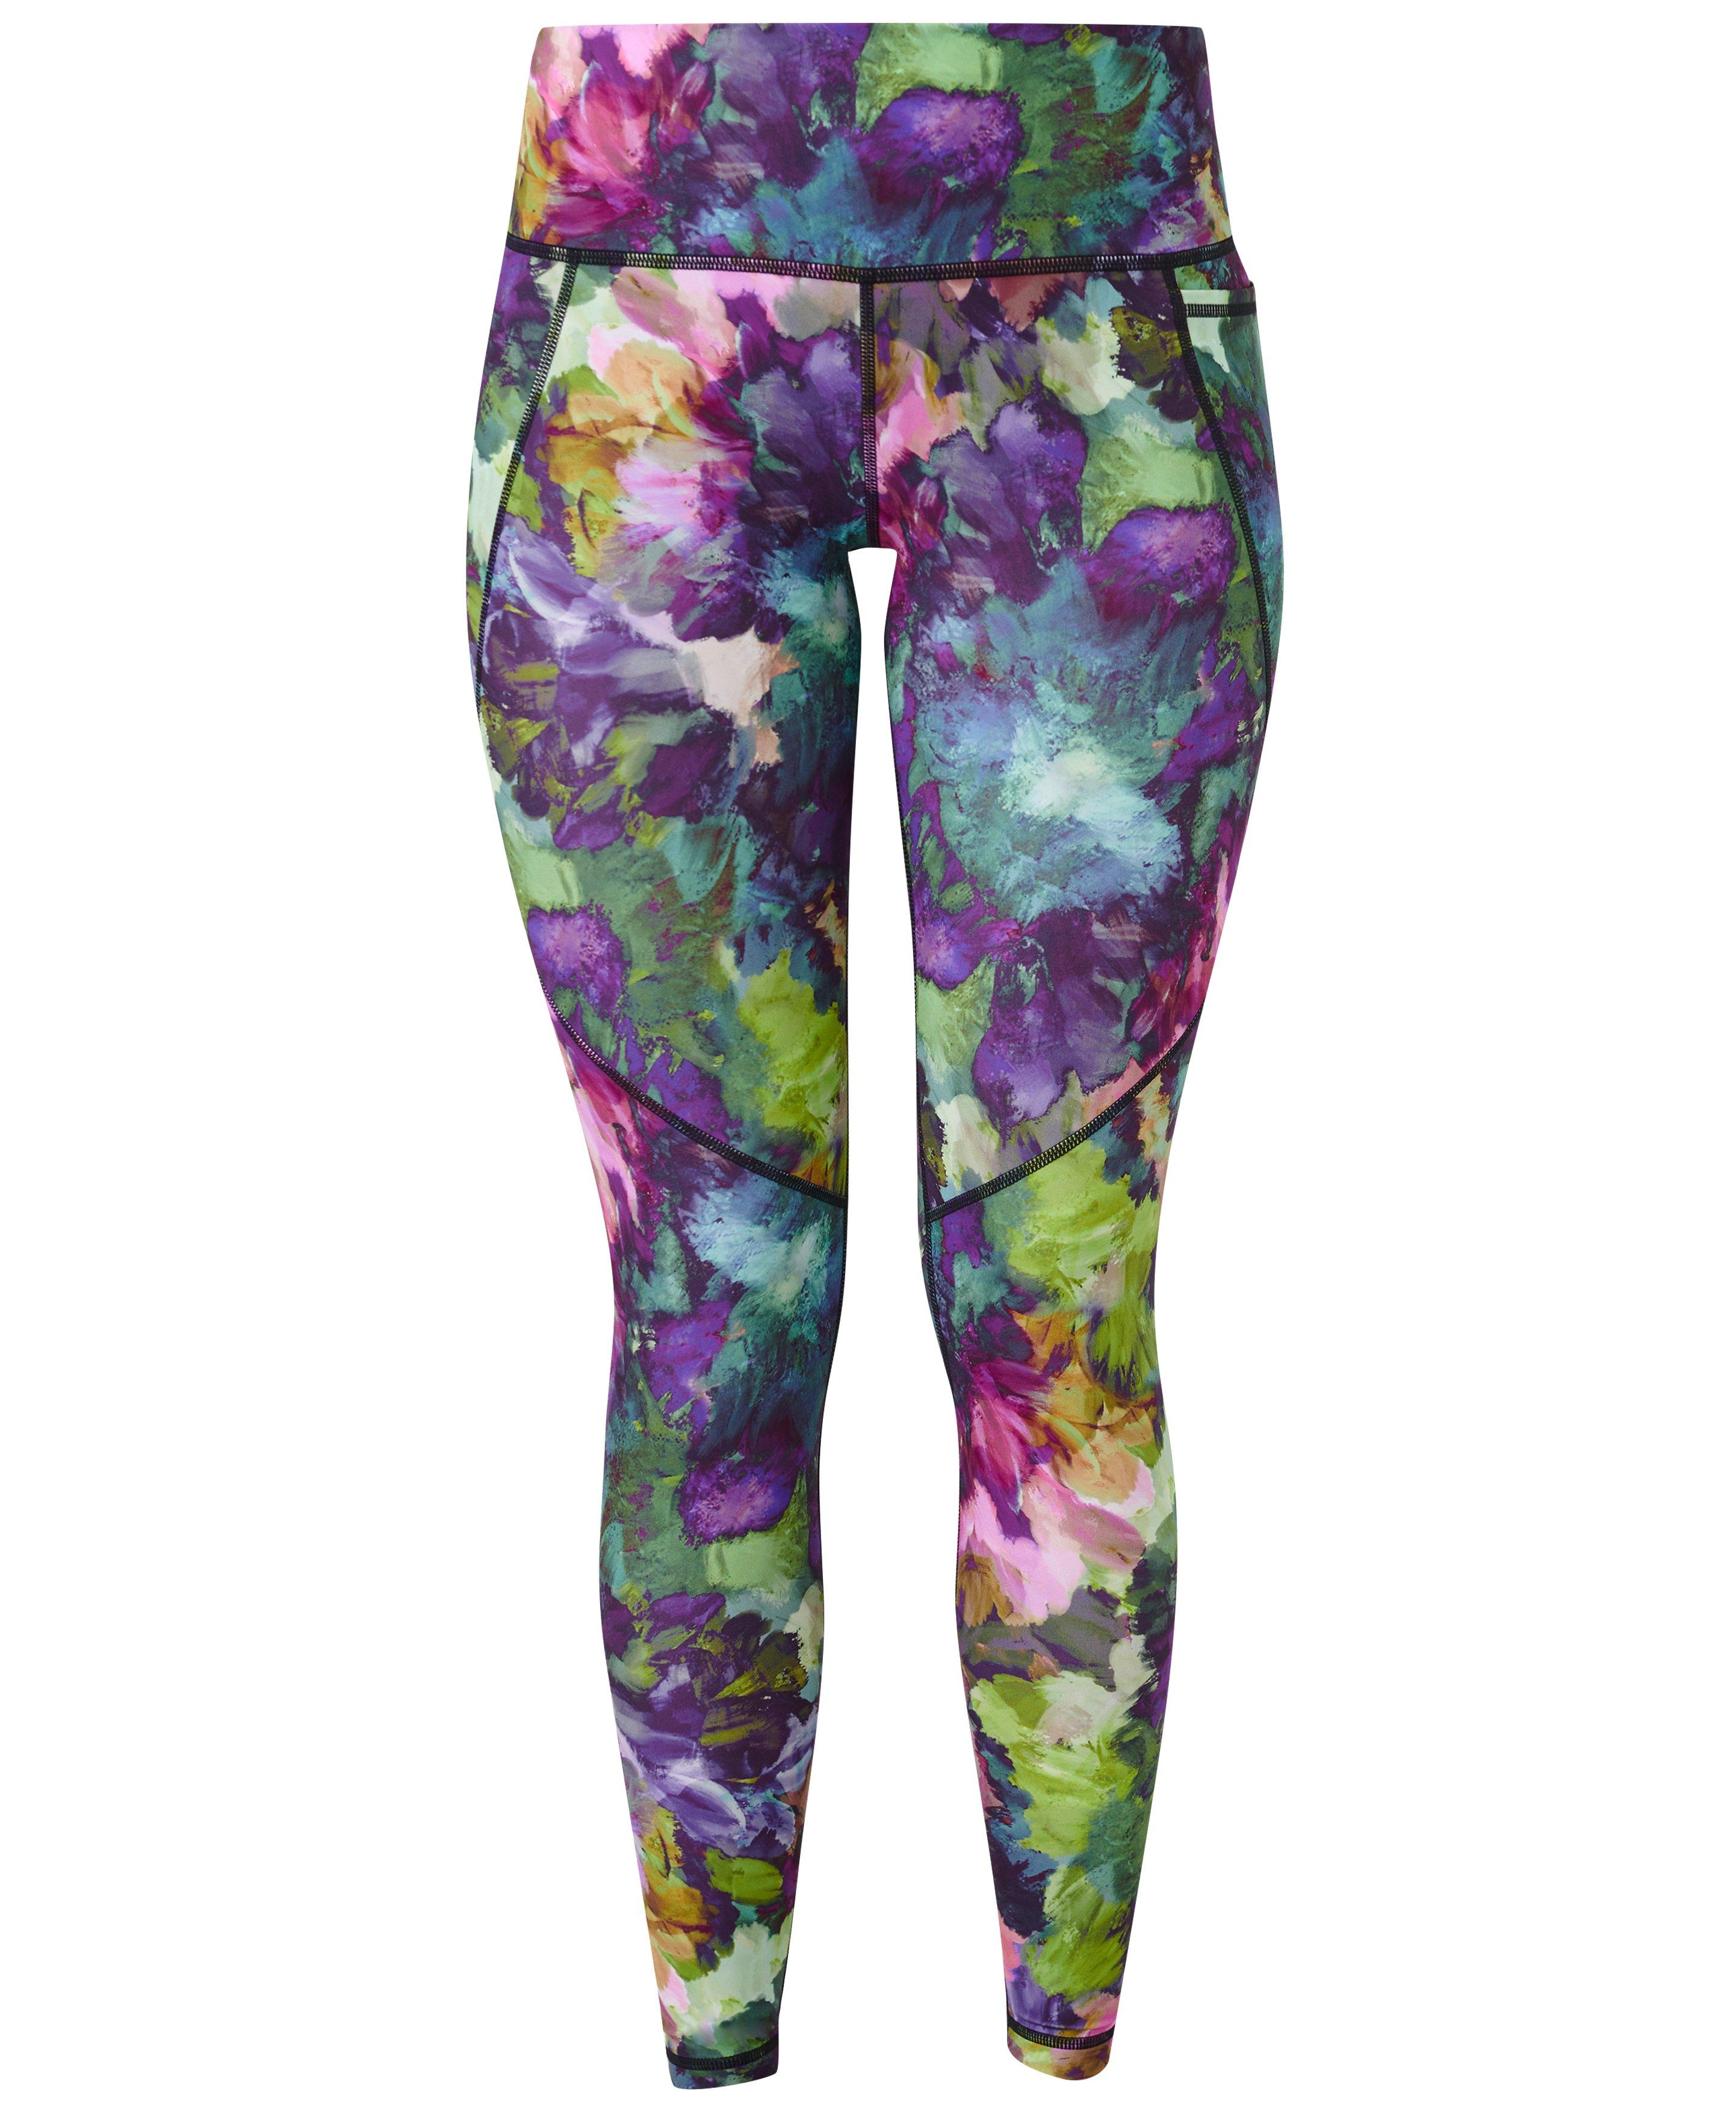 Female Shorts, Women' s Floral Print High Waist Yoga Pants Sport Pants, Pink,  S/M/L/XL/XXL